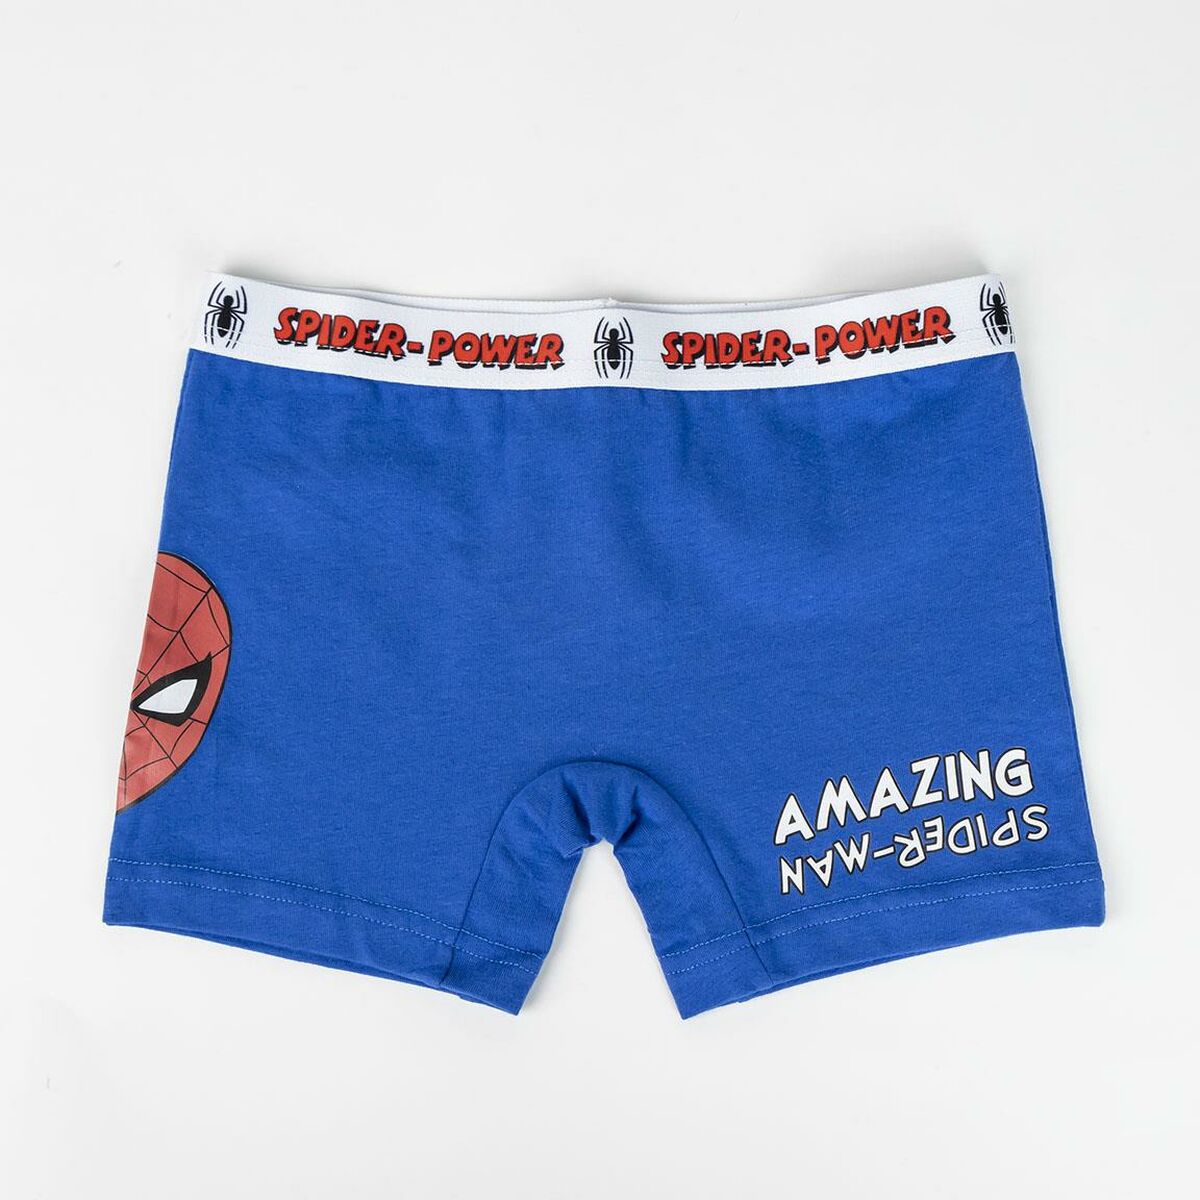 Pyjama Kinderen Spider-Man Rood Blauw